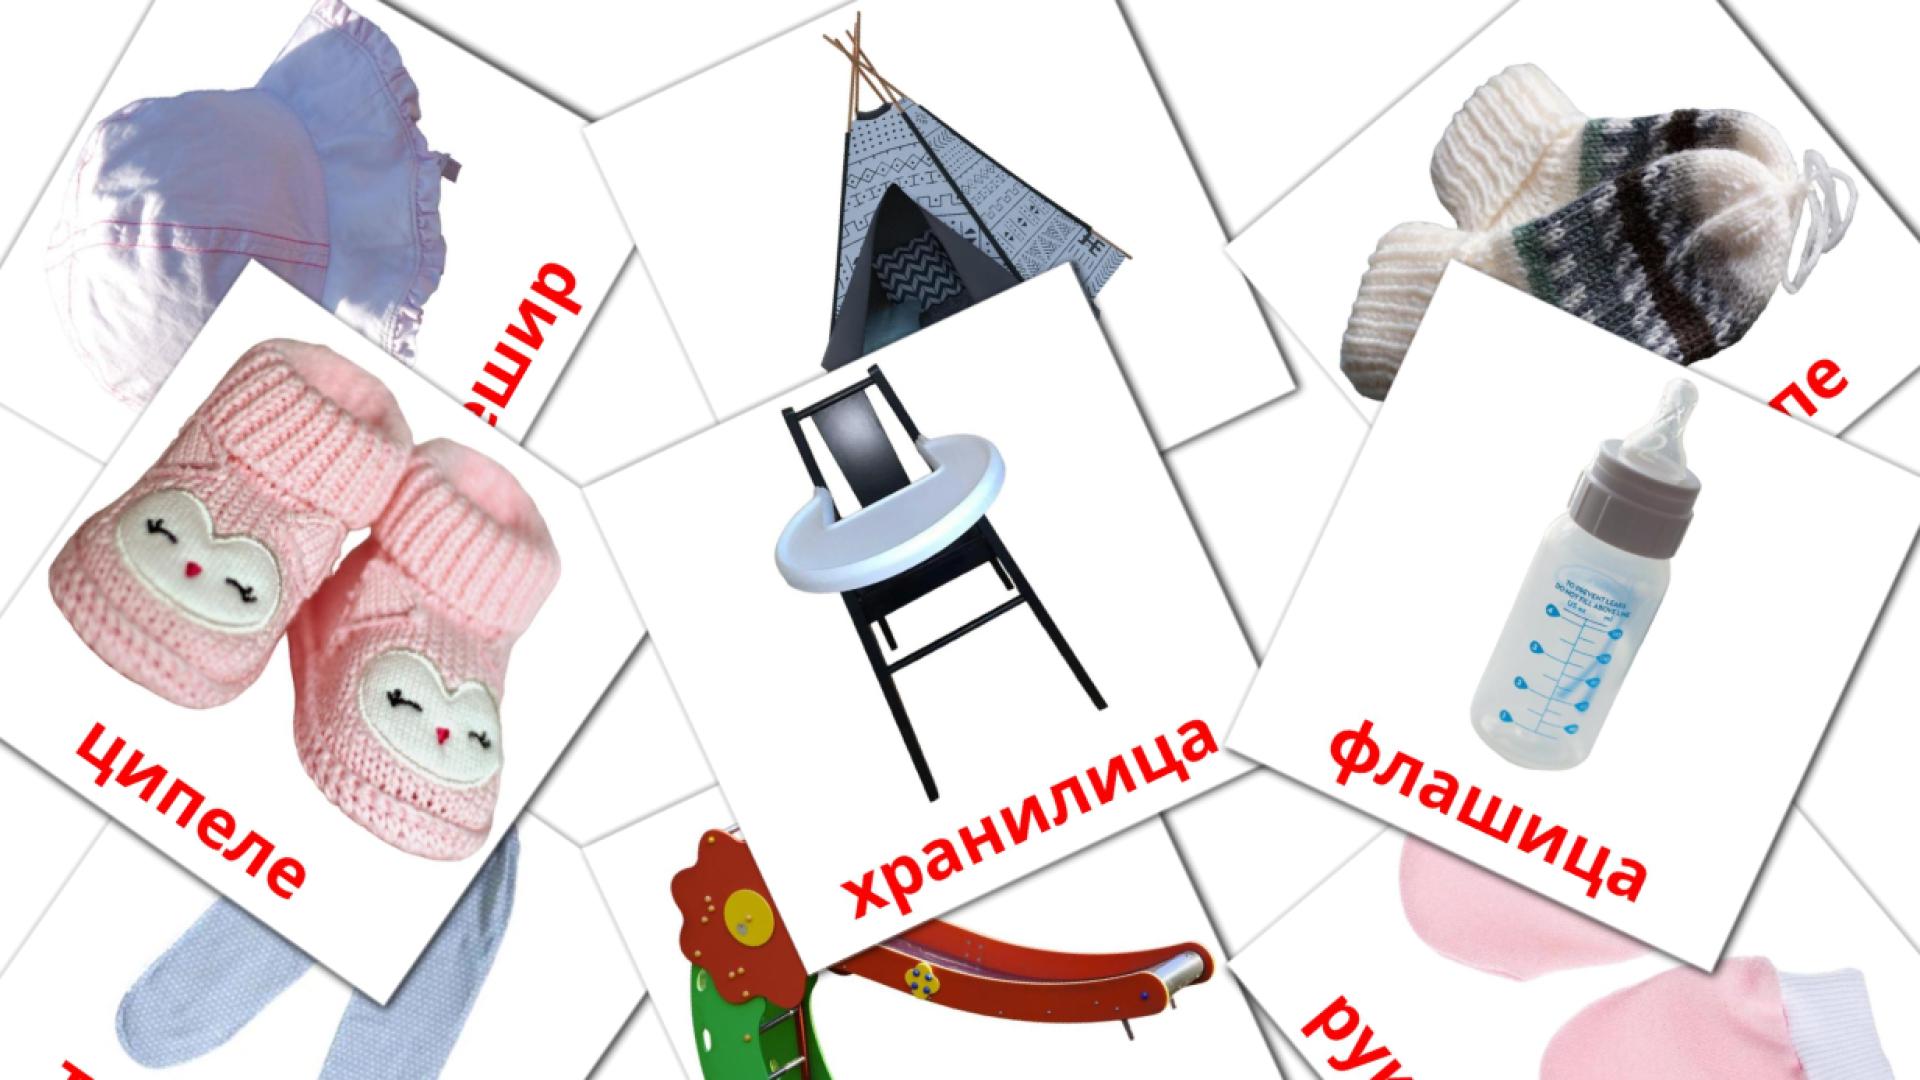 Беба serbian(cyrillic) vocabulary flashcards